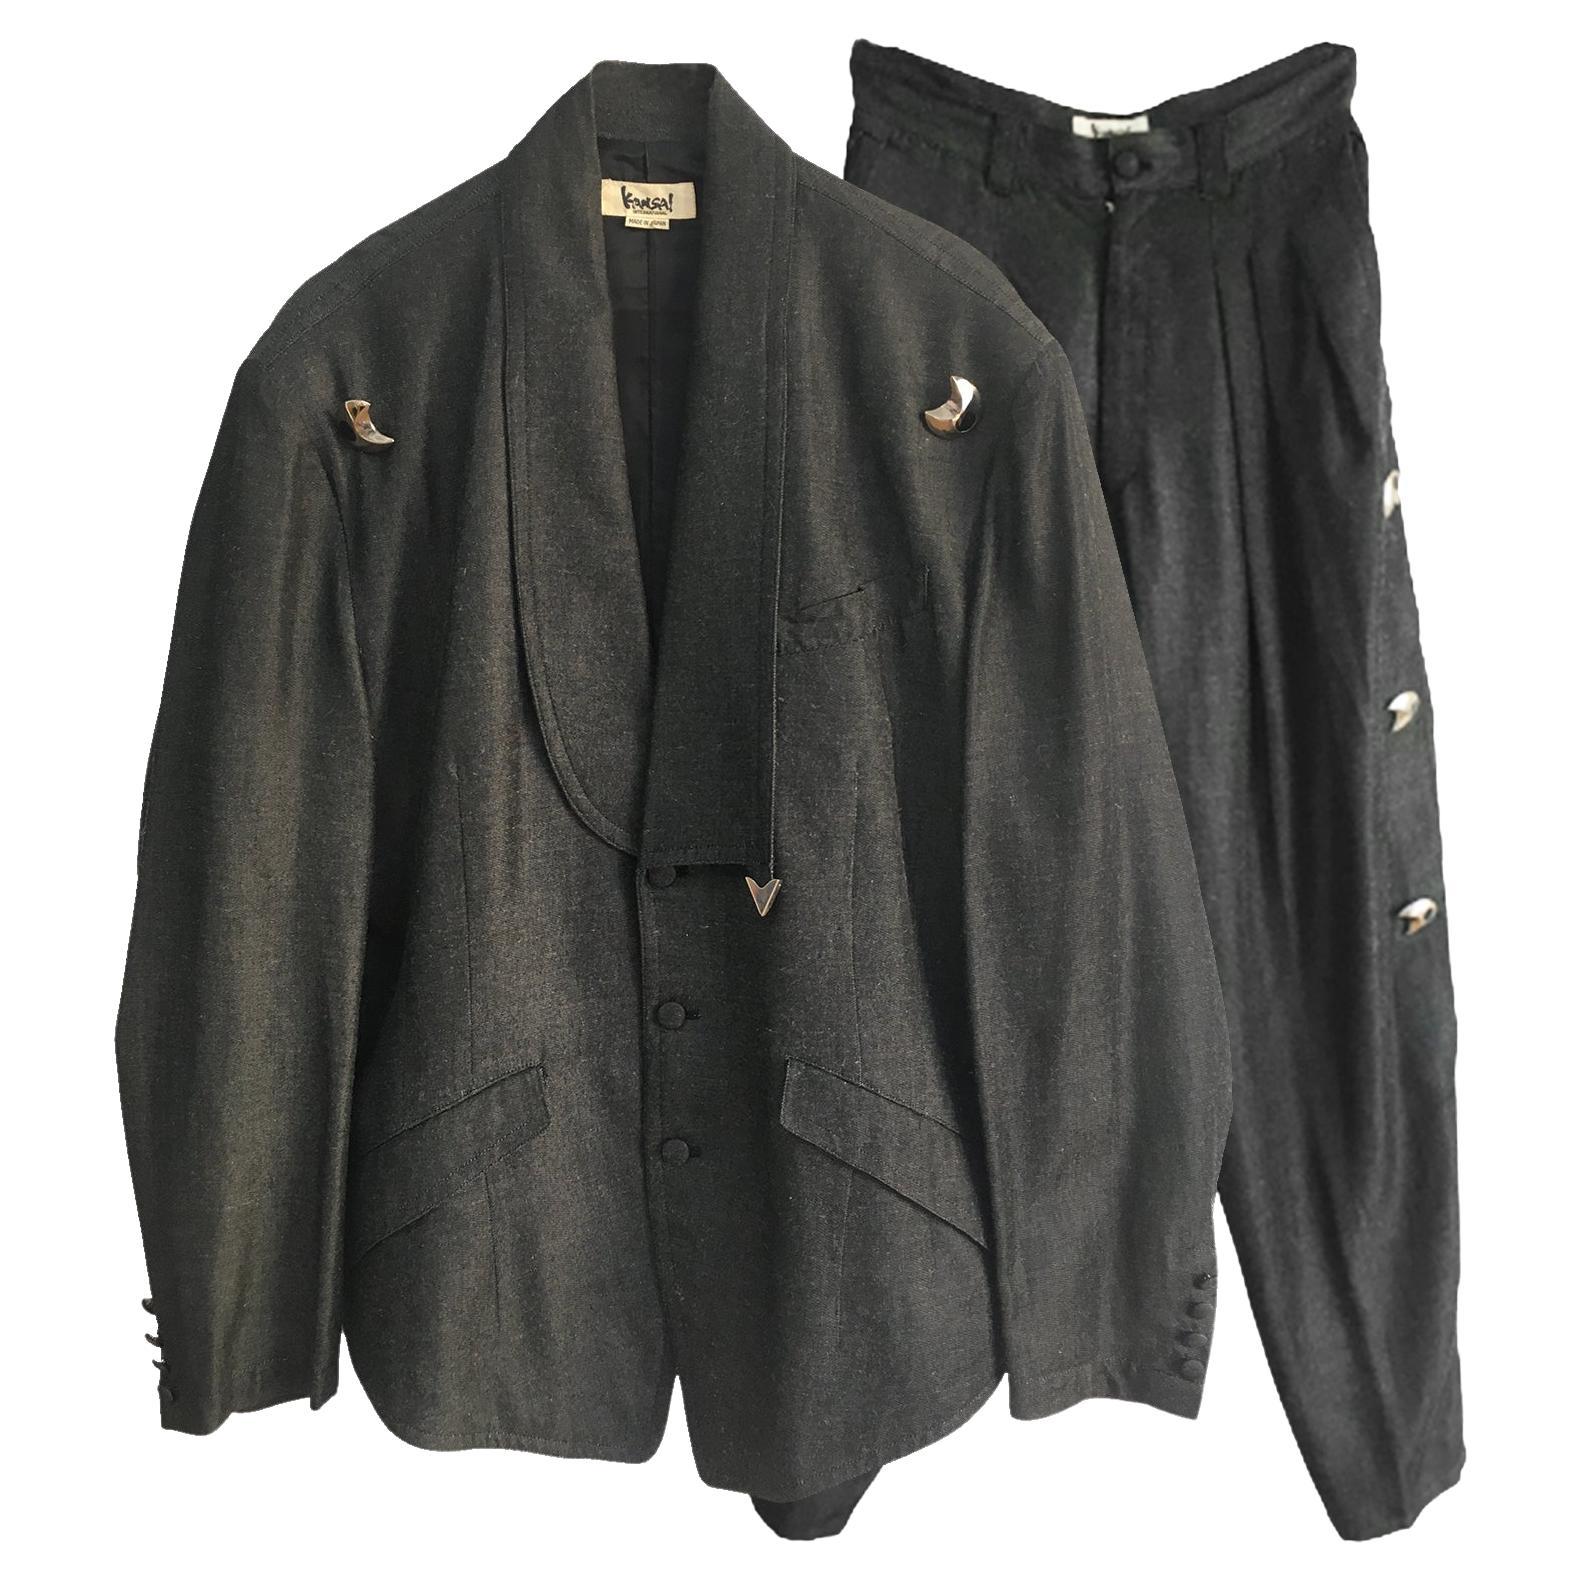 Kansai Yamamoto Dark Grey Jacket Pantsuit Circa Mid 80s For Sale